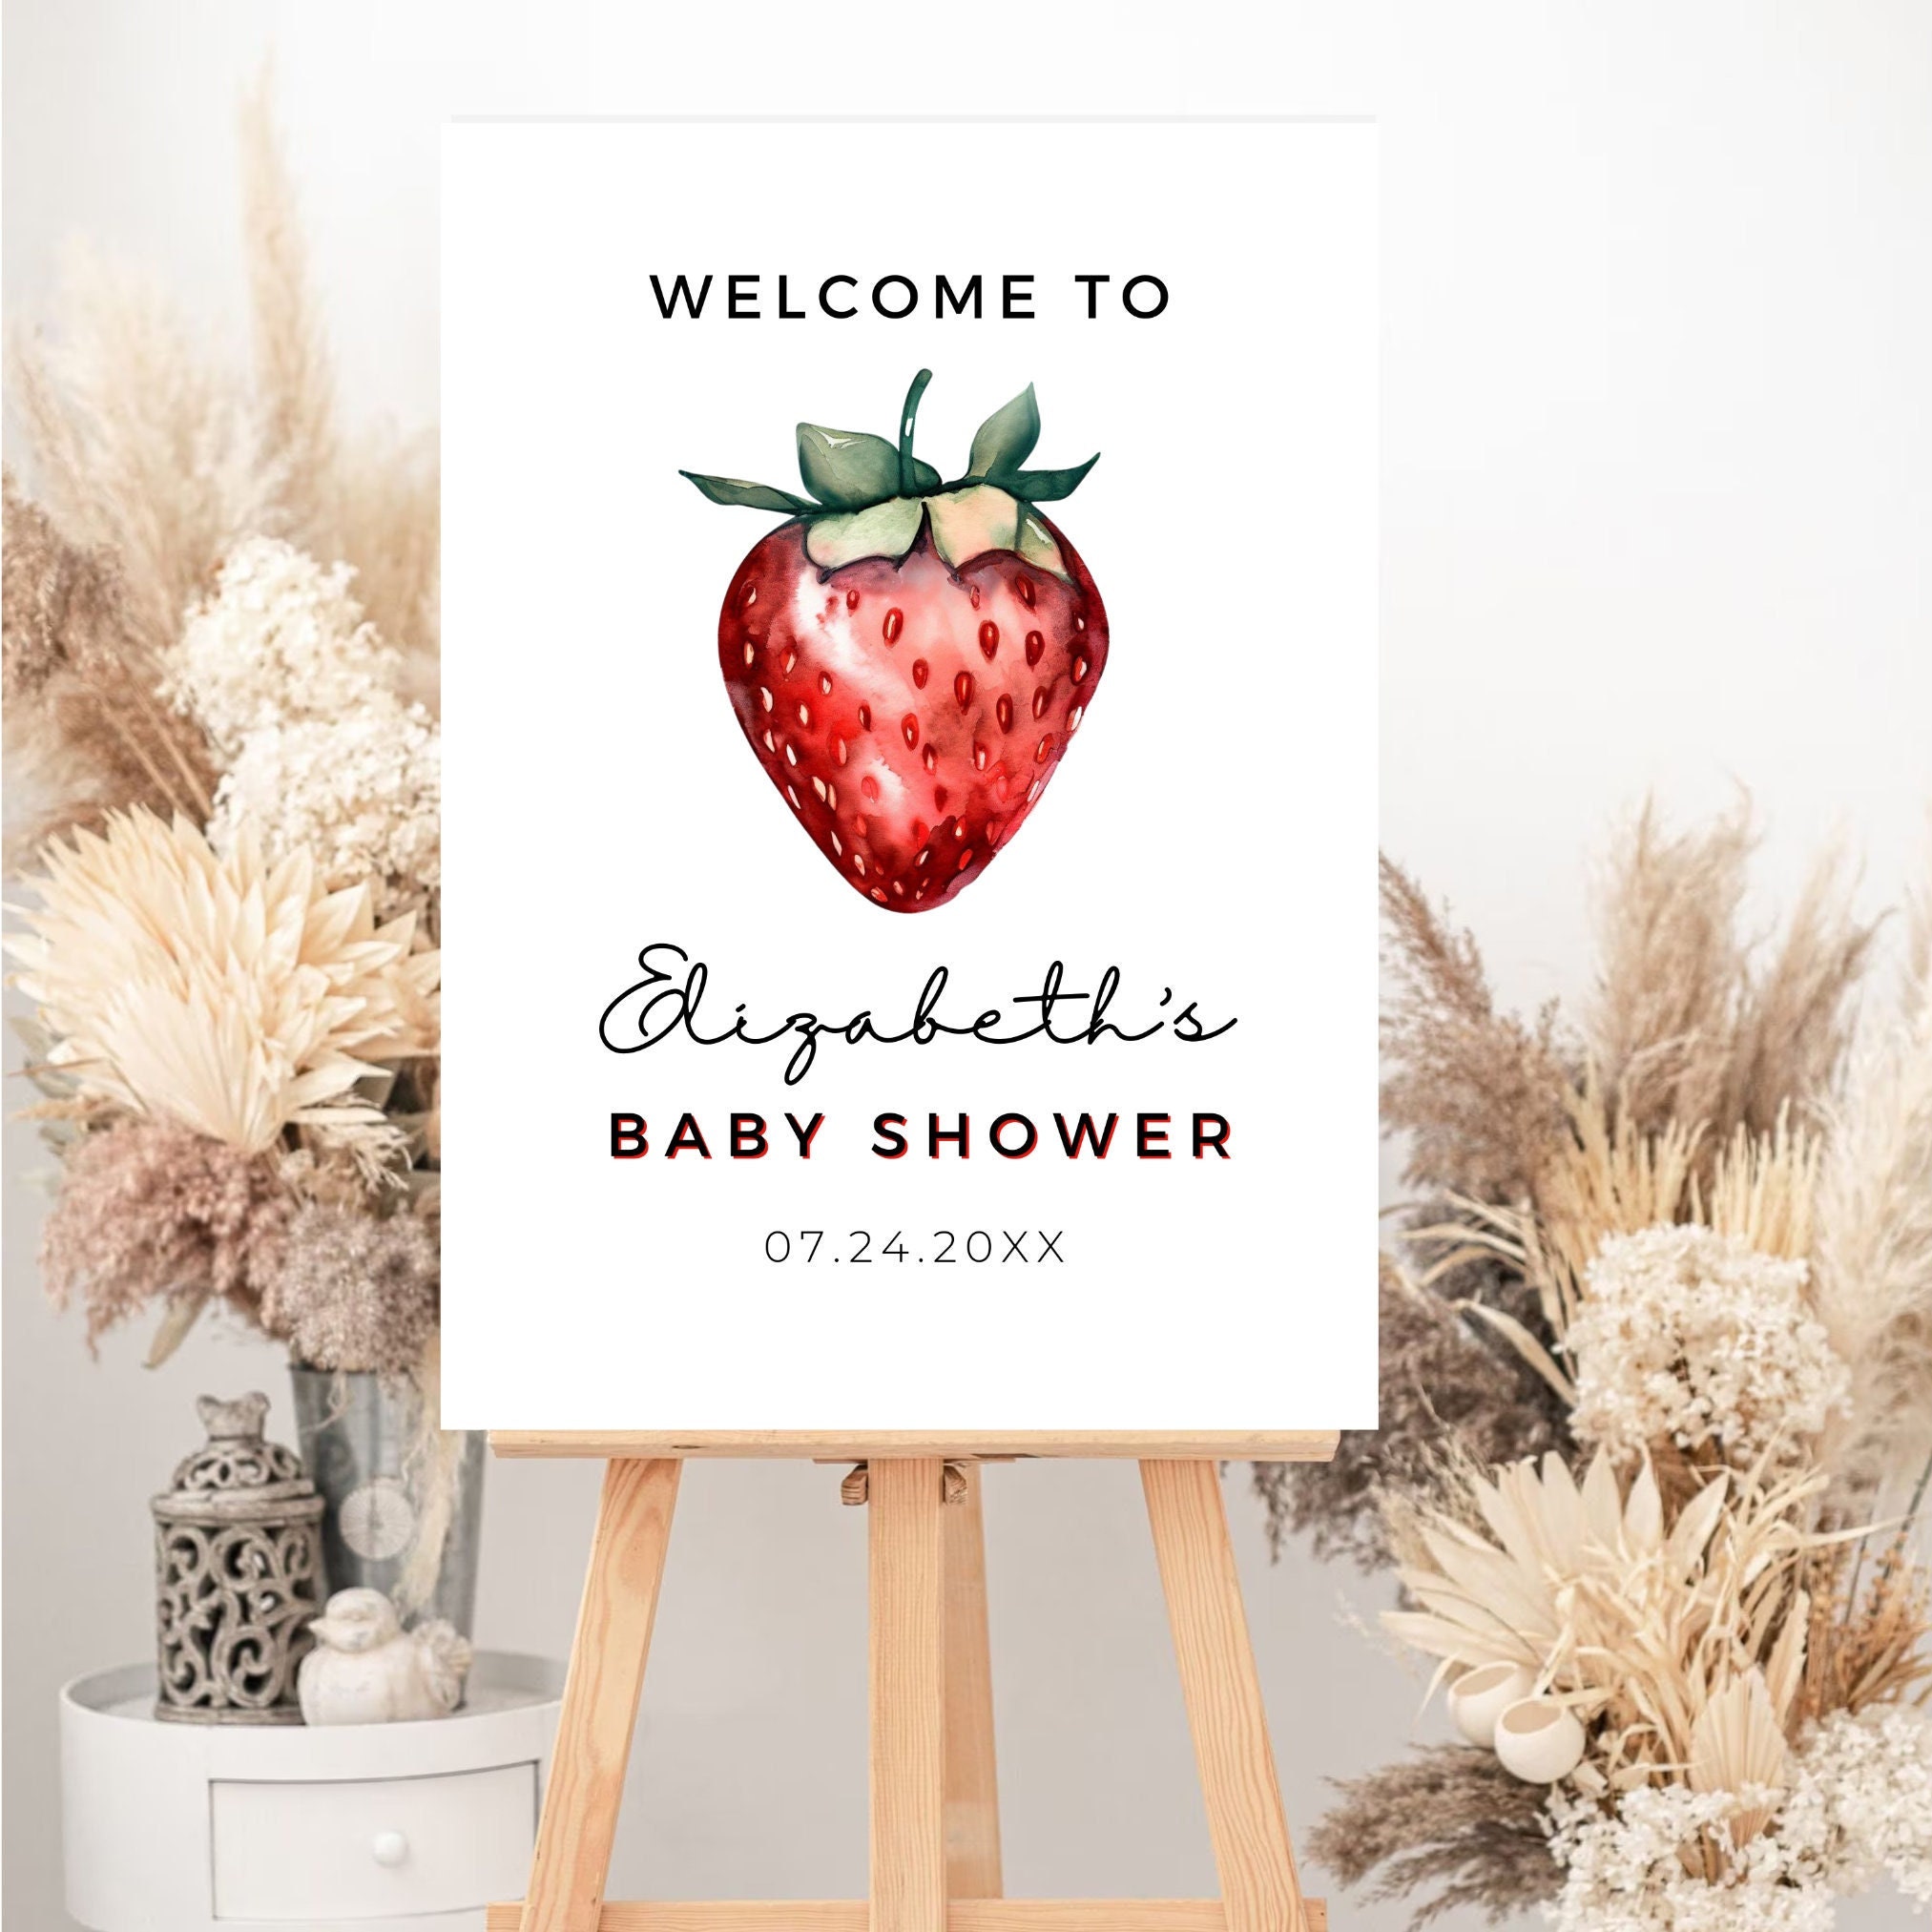 Berry sweet baby shower 🍓 #berrysweetbaby #berrysweetbabyshower